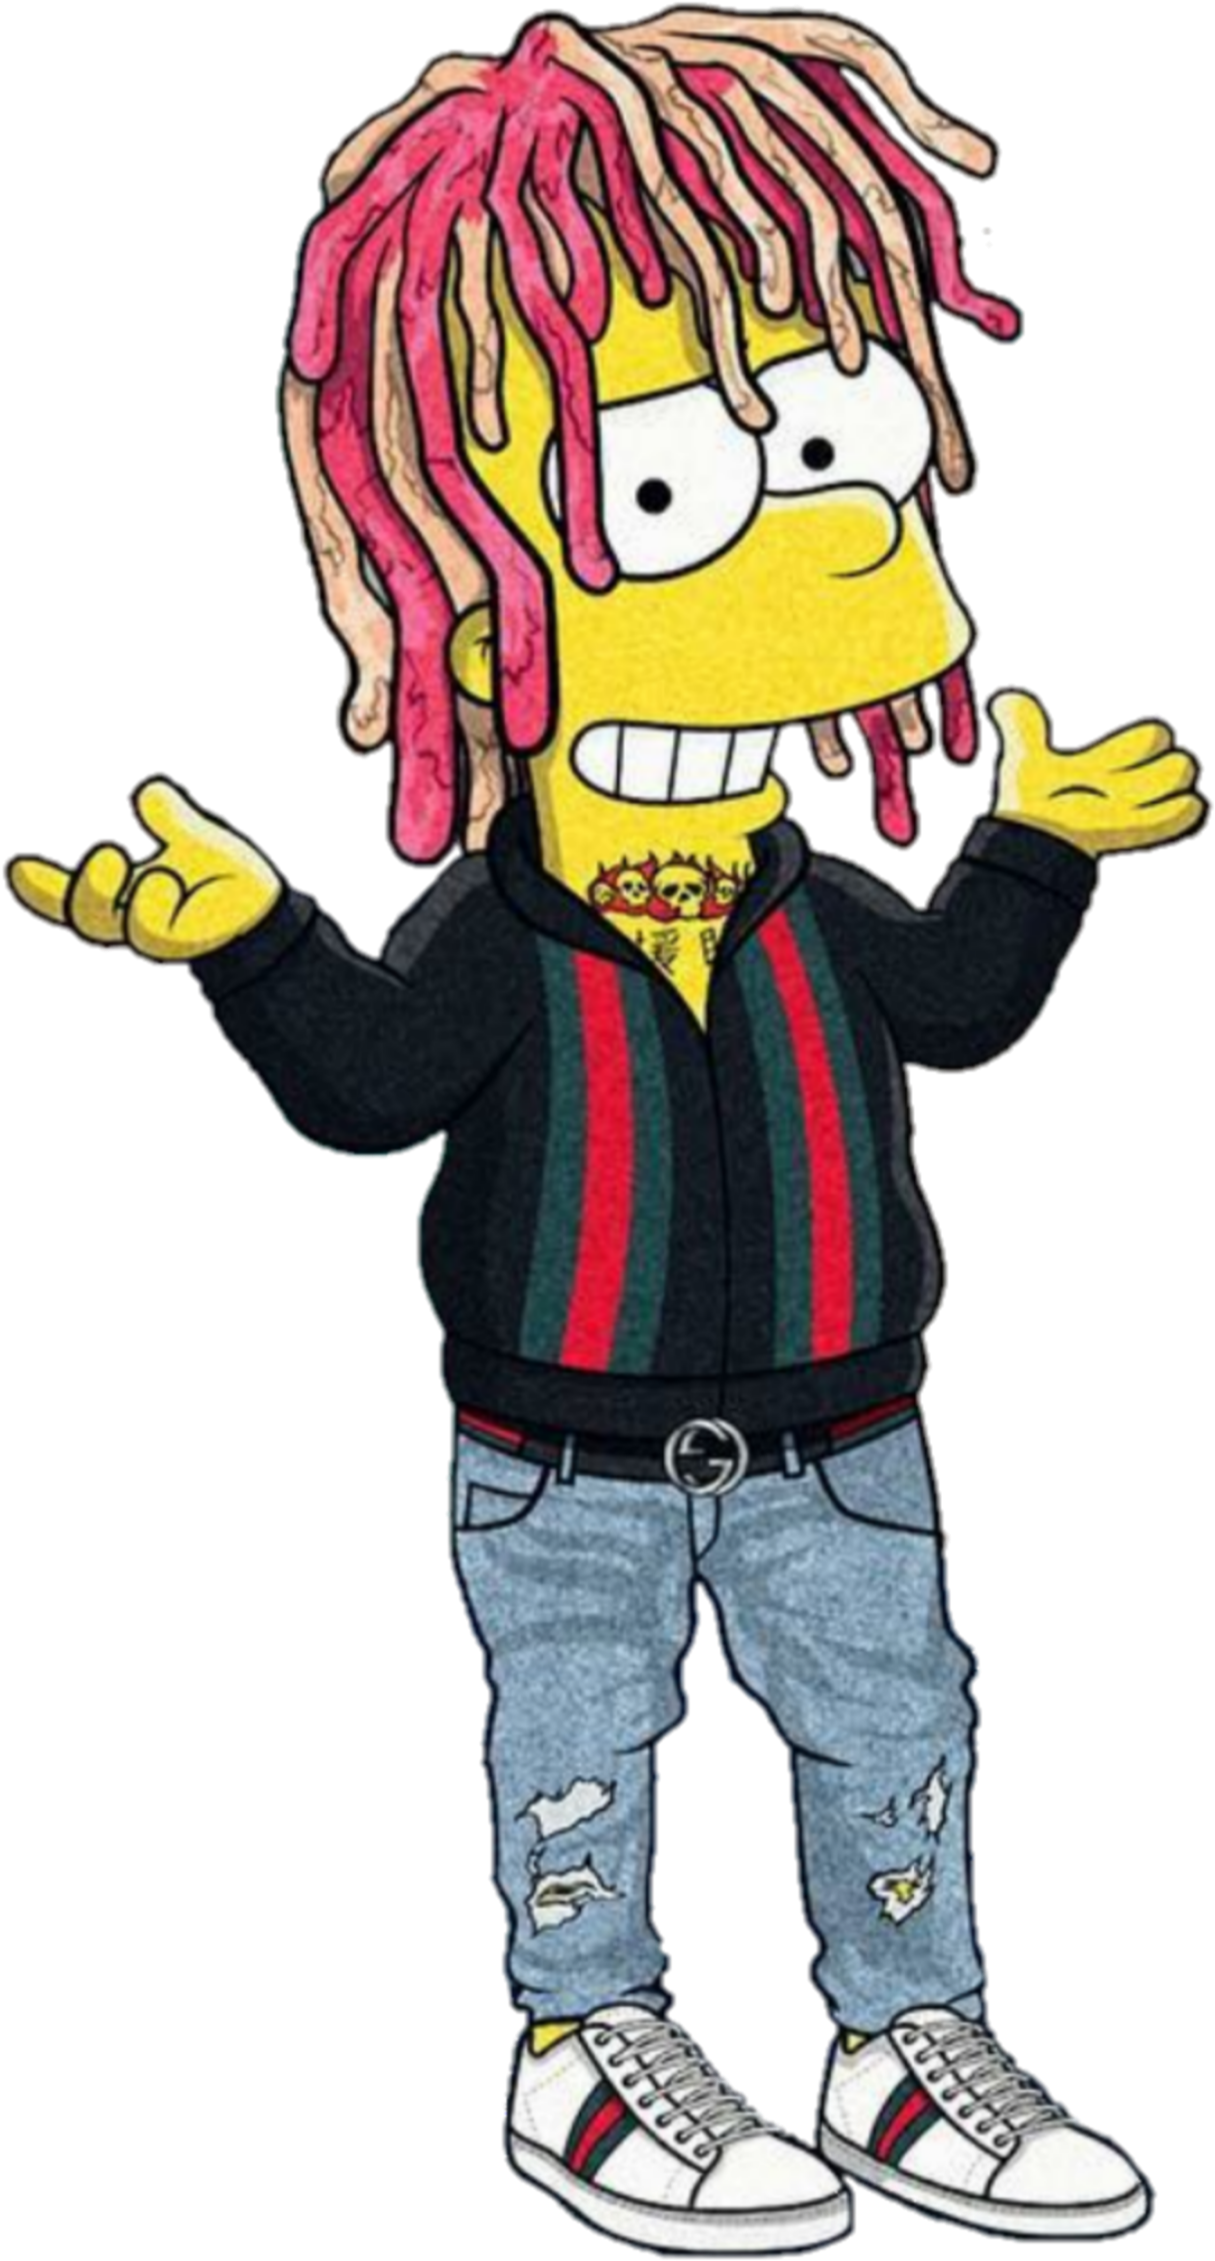 Stylized Bart Simpson Character